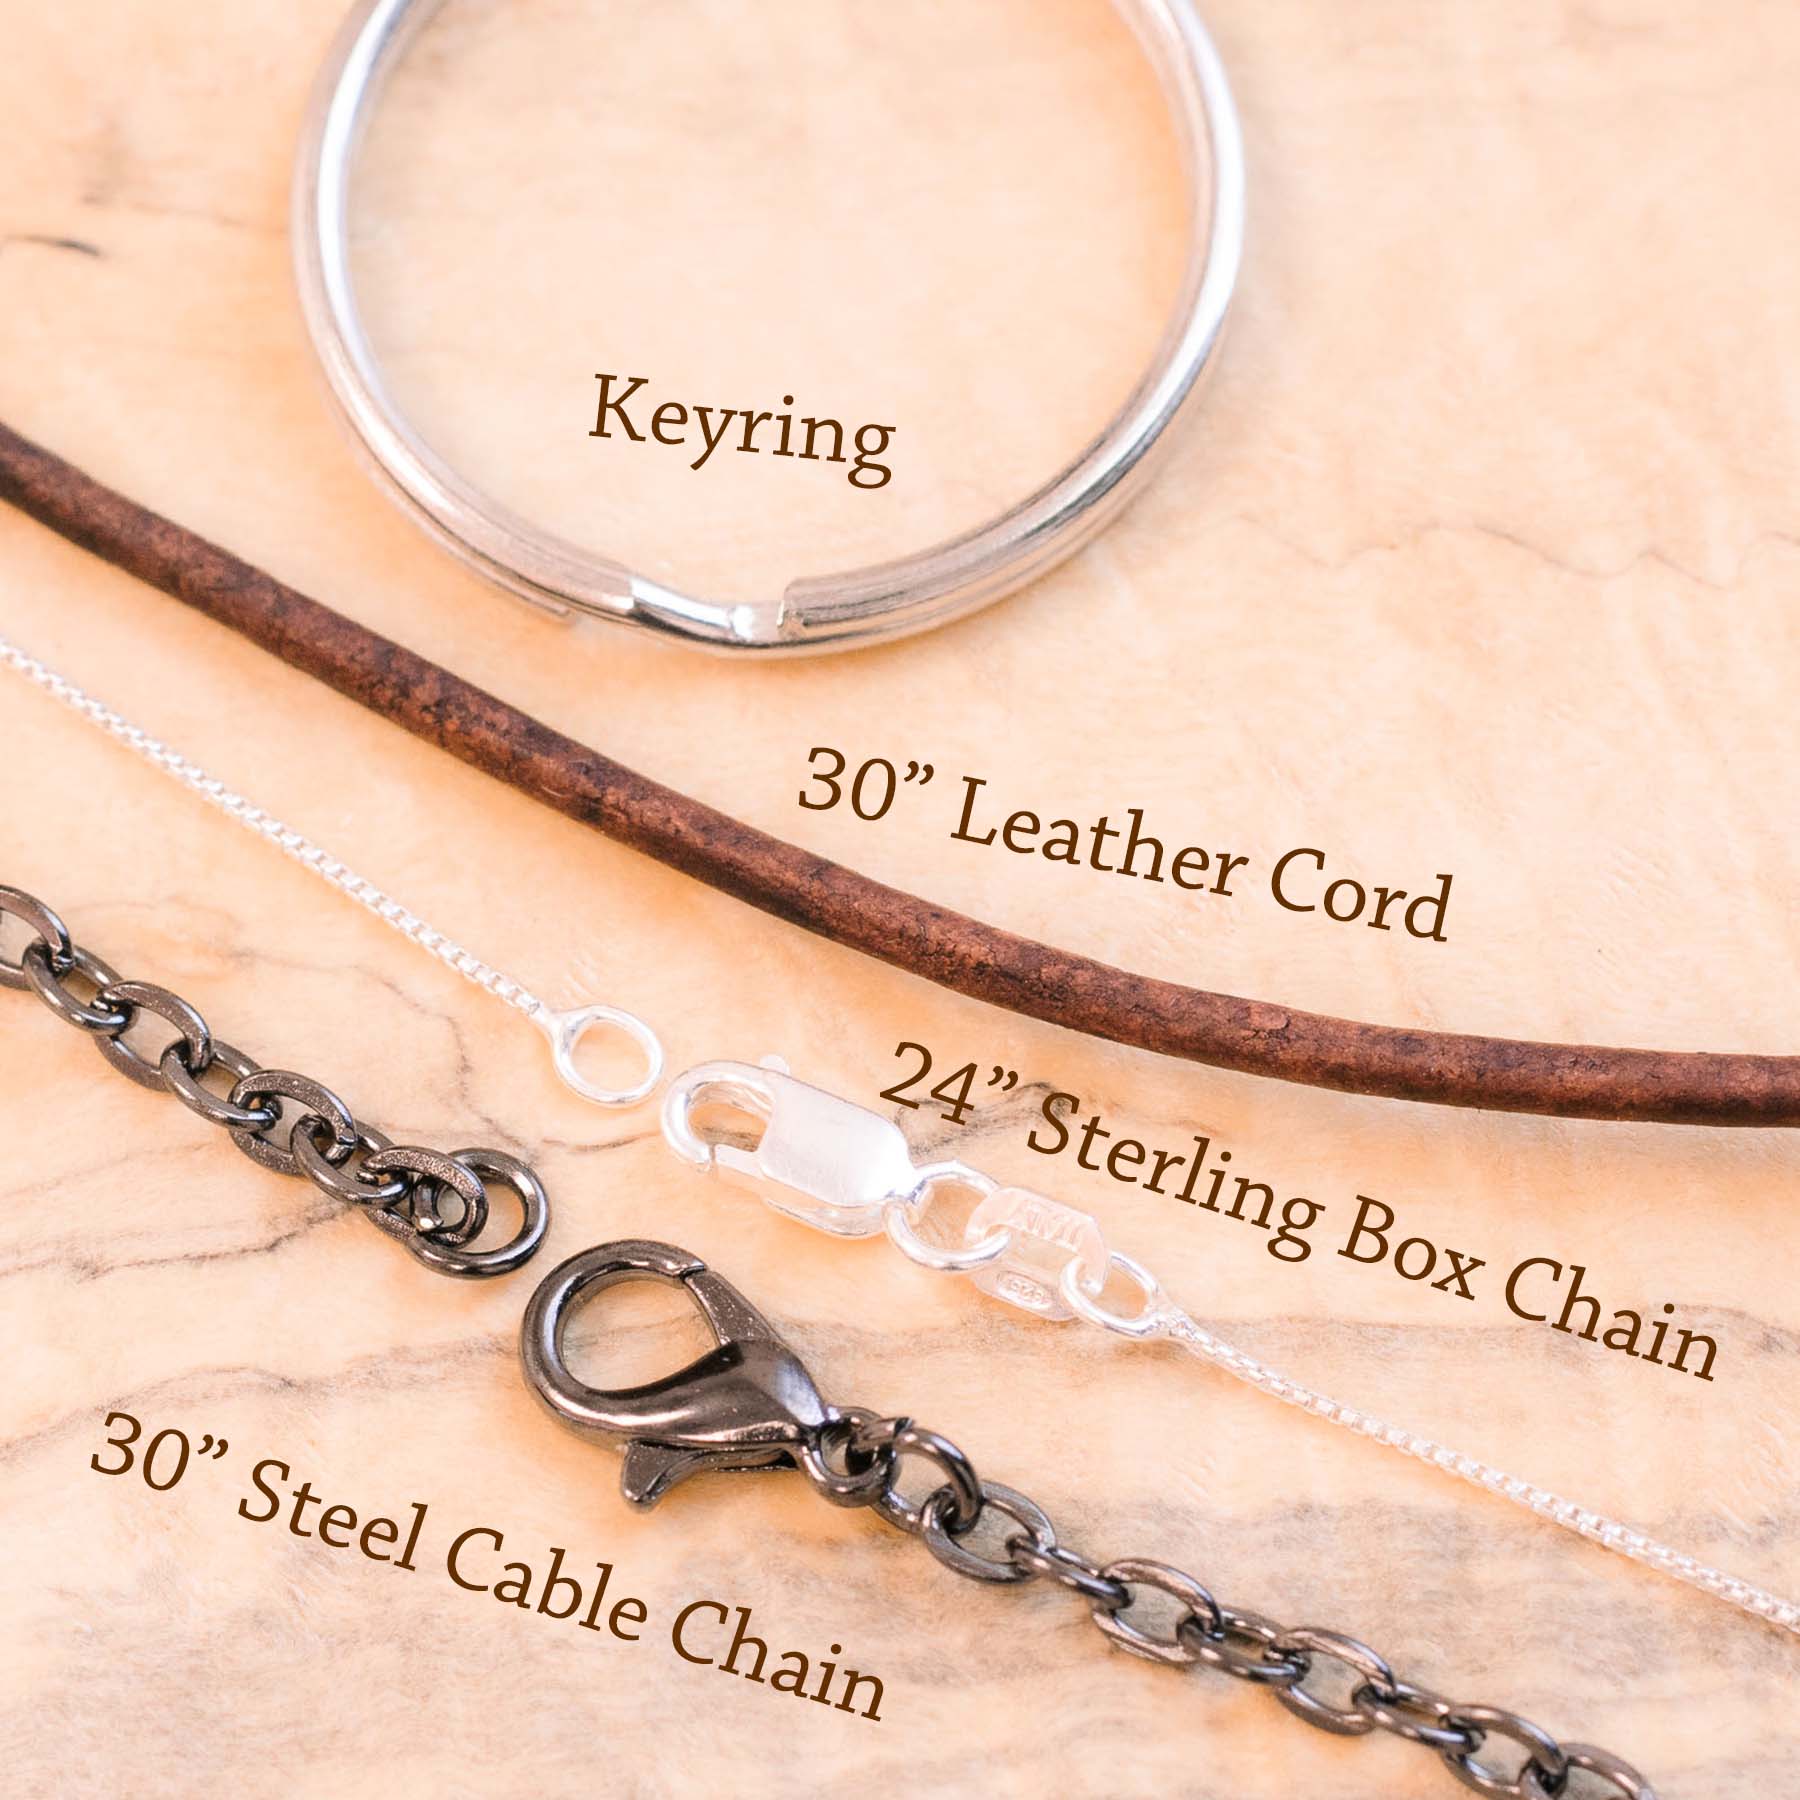 Copper Super Blood Moon Necklace - Large 1.5" Pendant or Charm